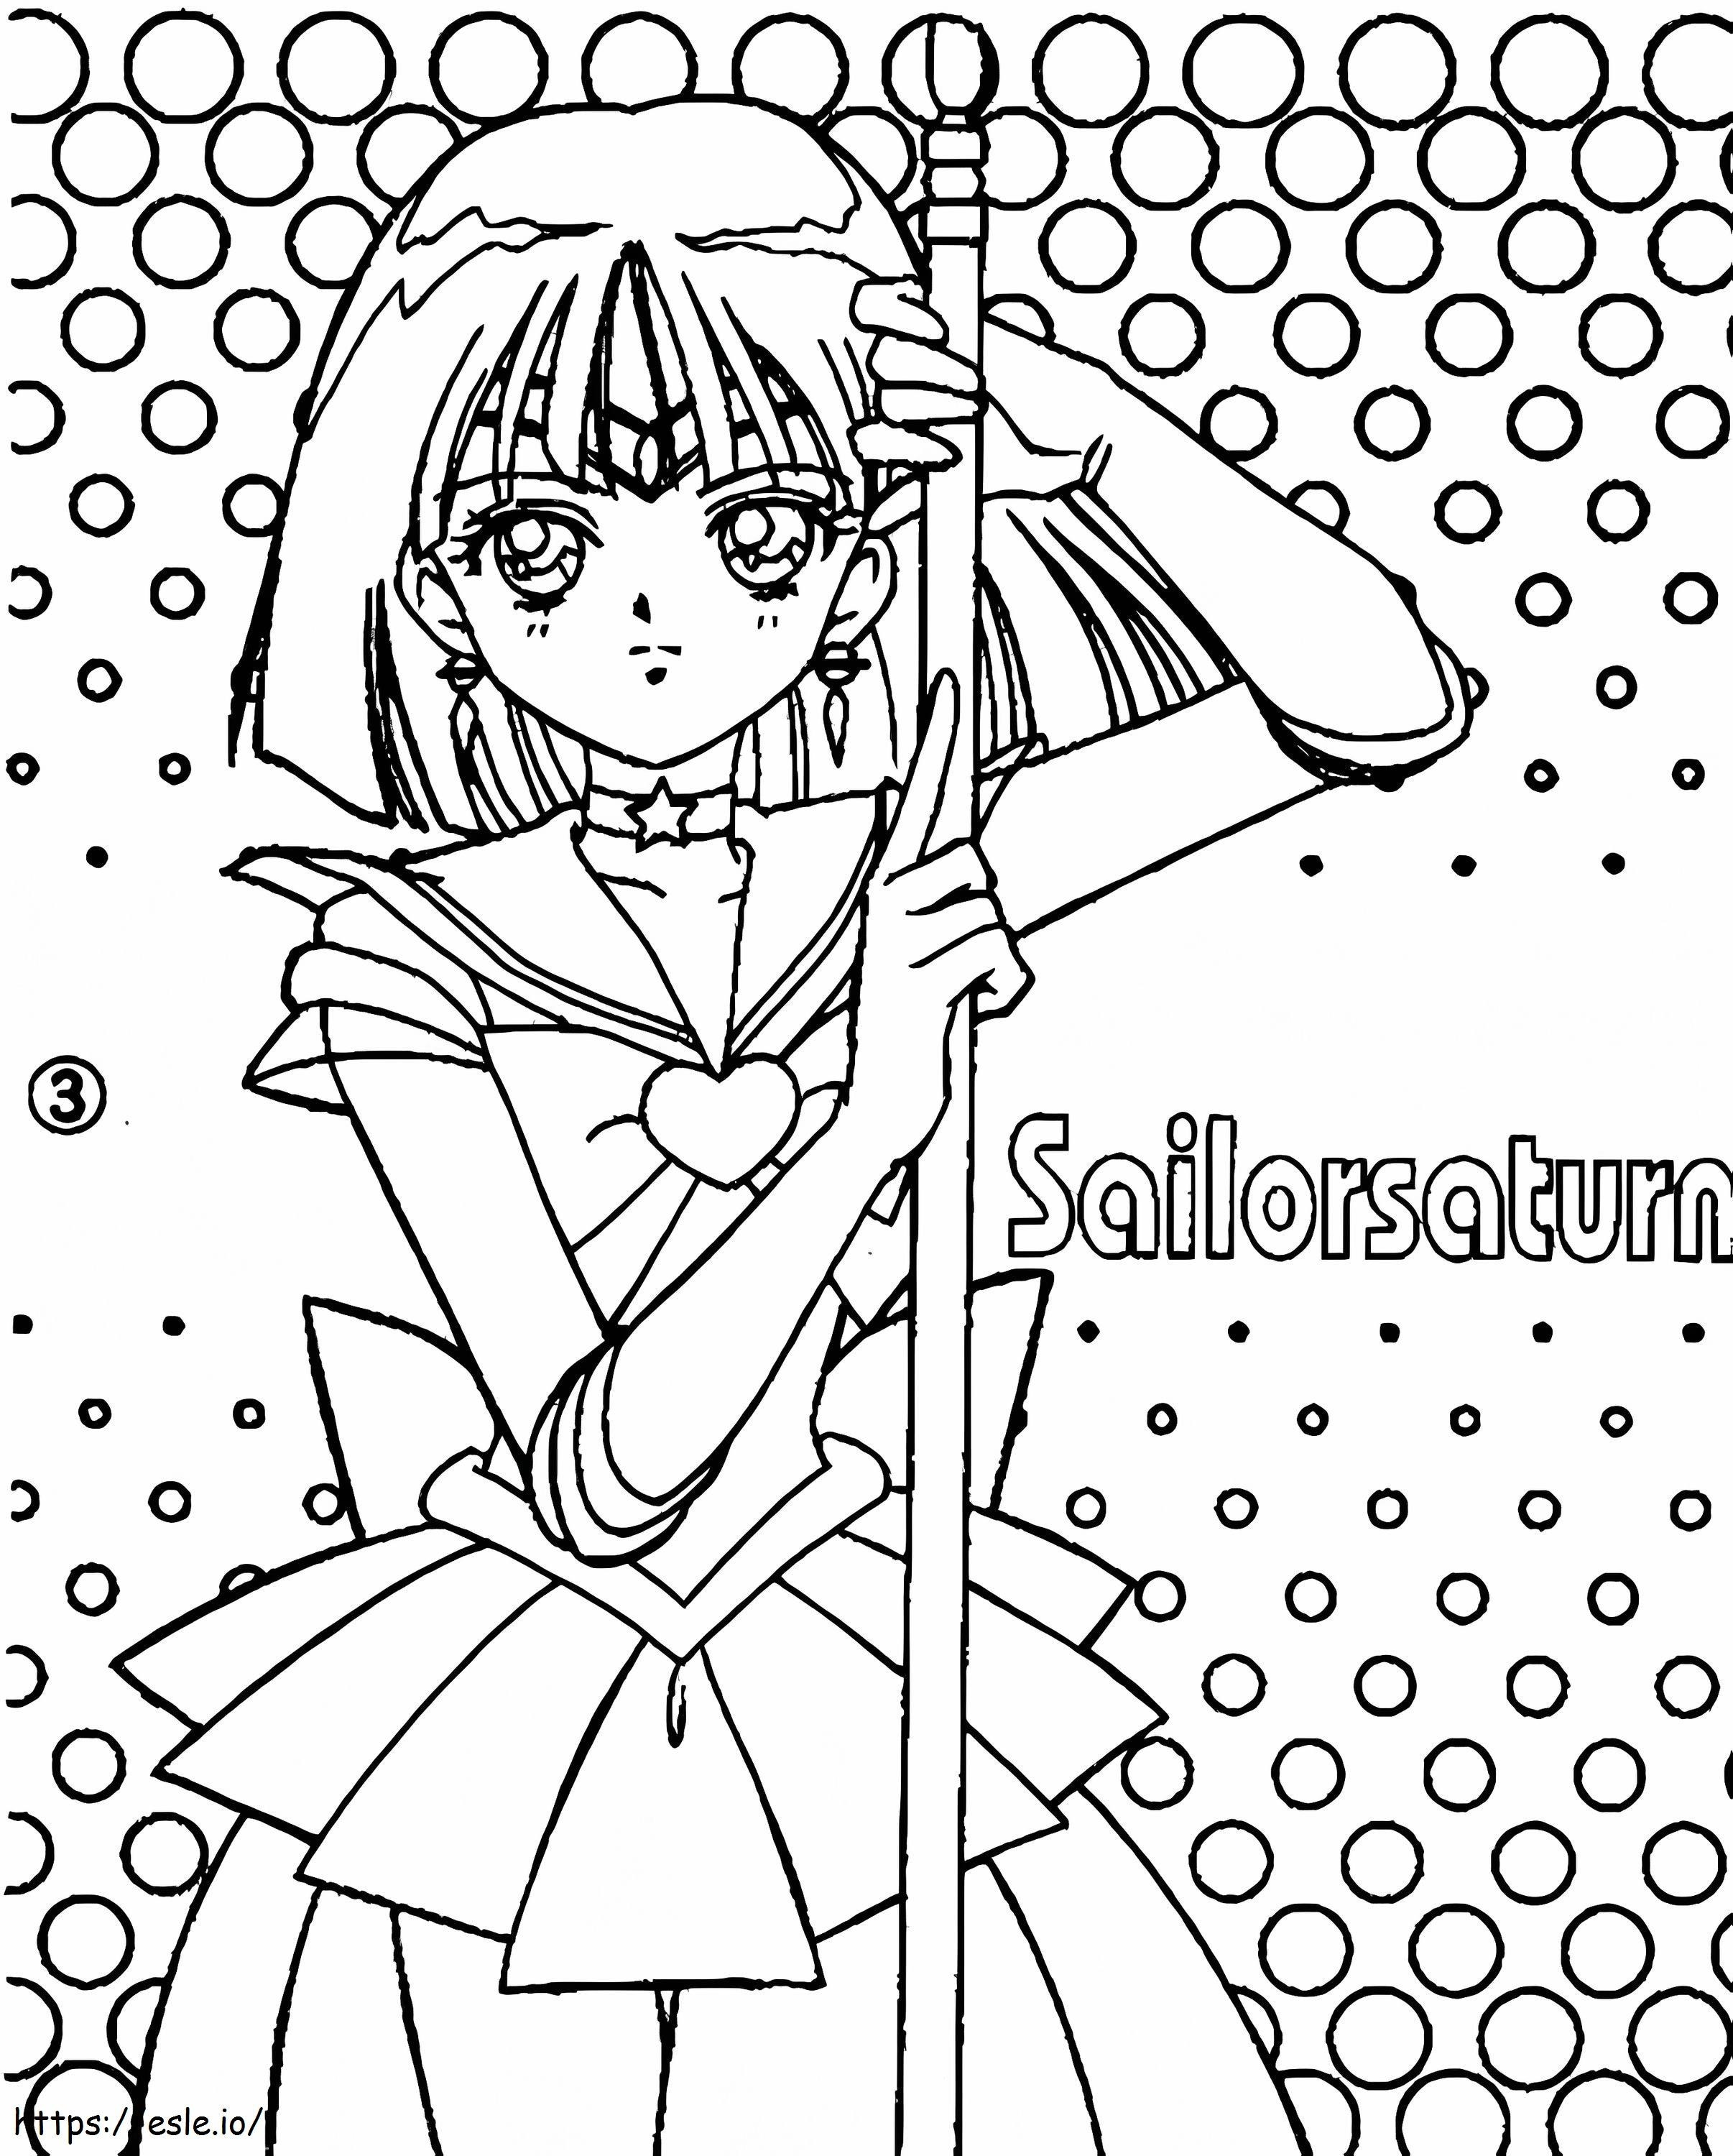 Pretty Sailor Saturn coloring page